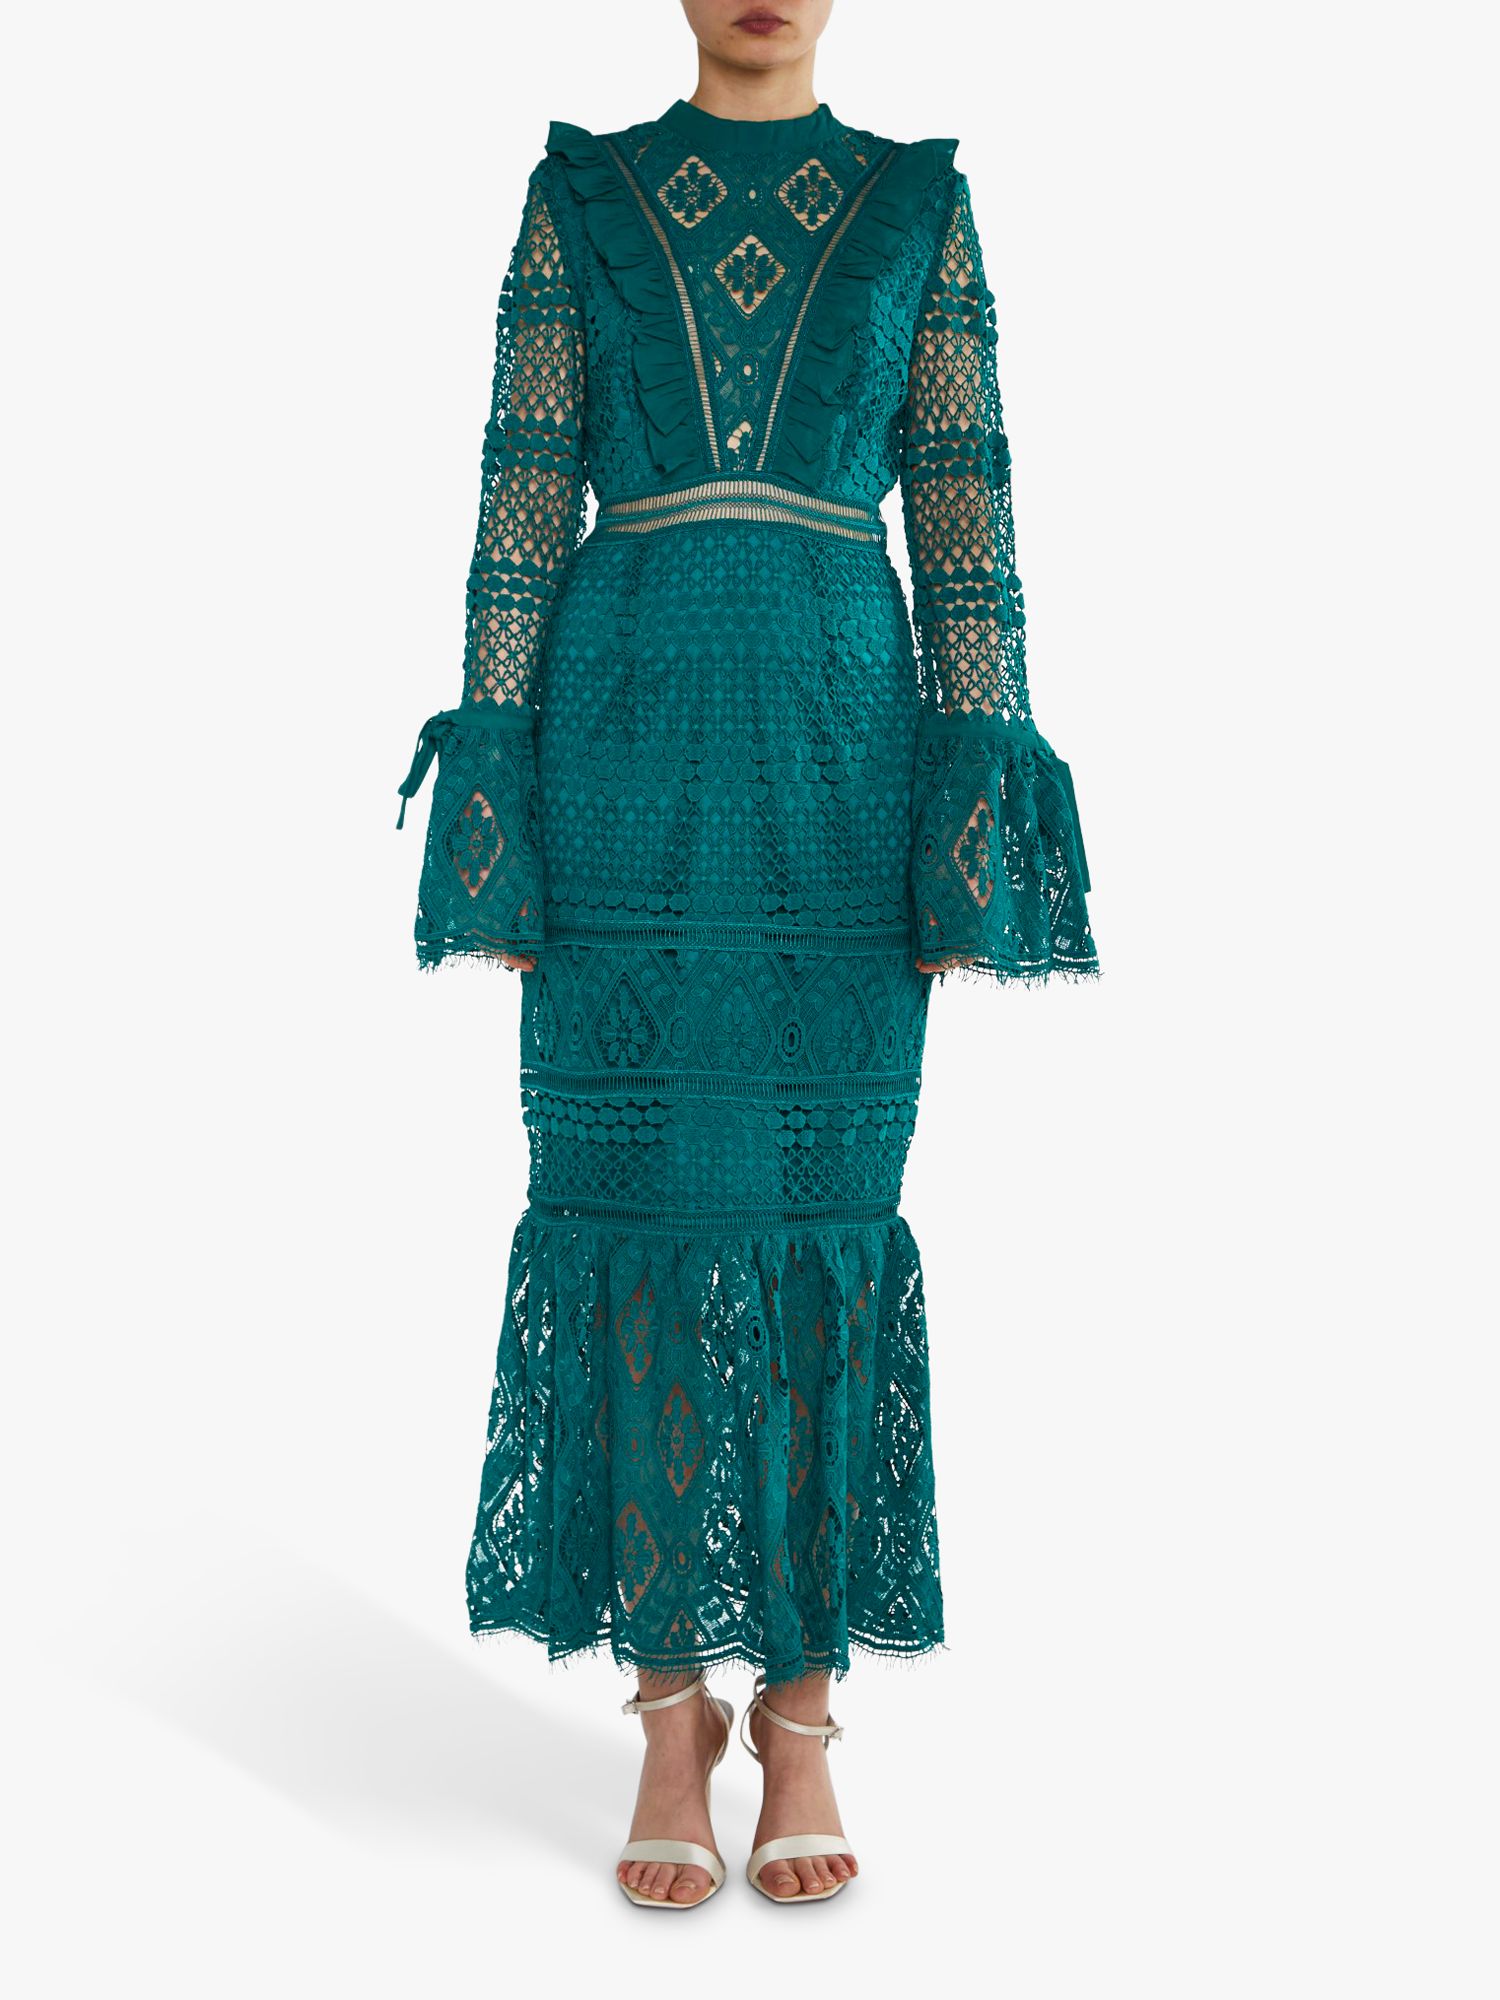 True Decadence Jenna Peplum Sleeve Lace Maxi Dress, Emerald Green, 6